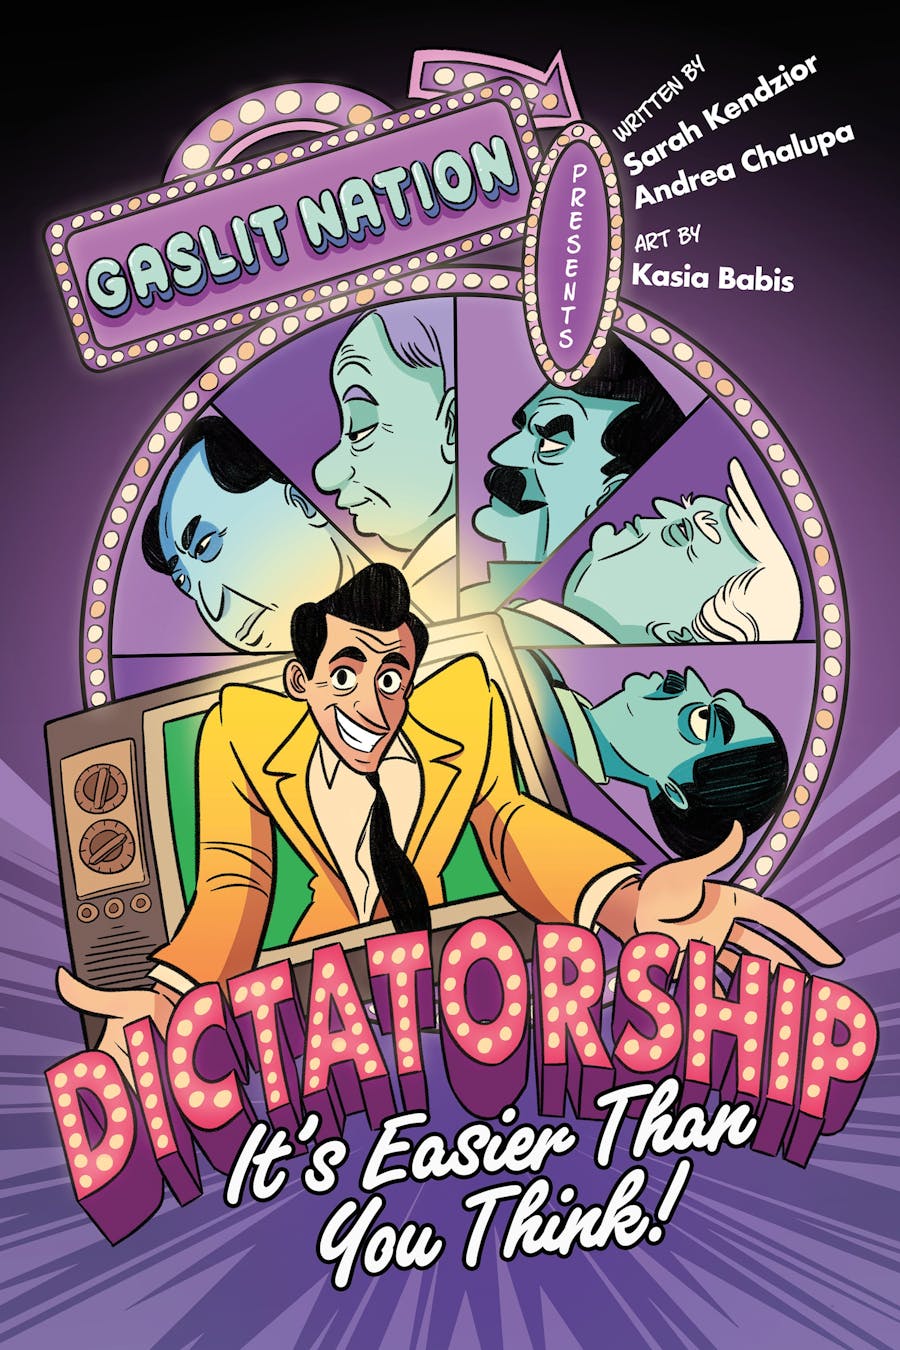 Book cover: "Dictatorship!"